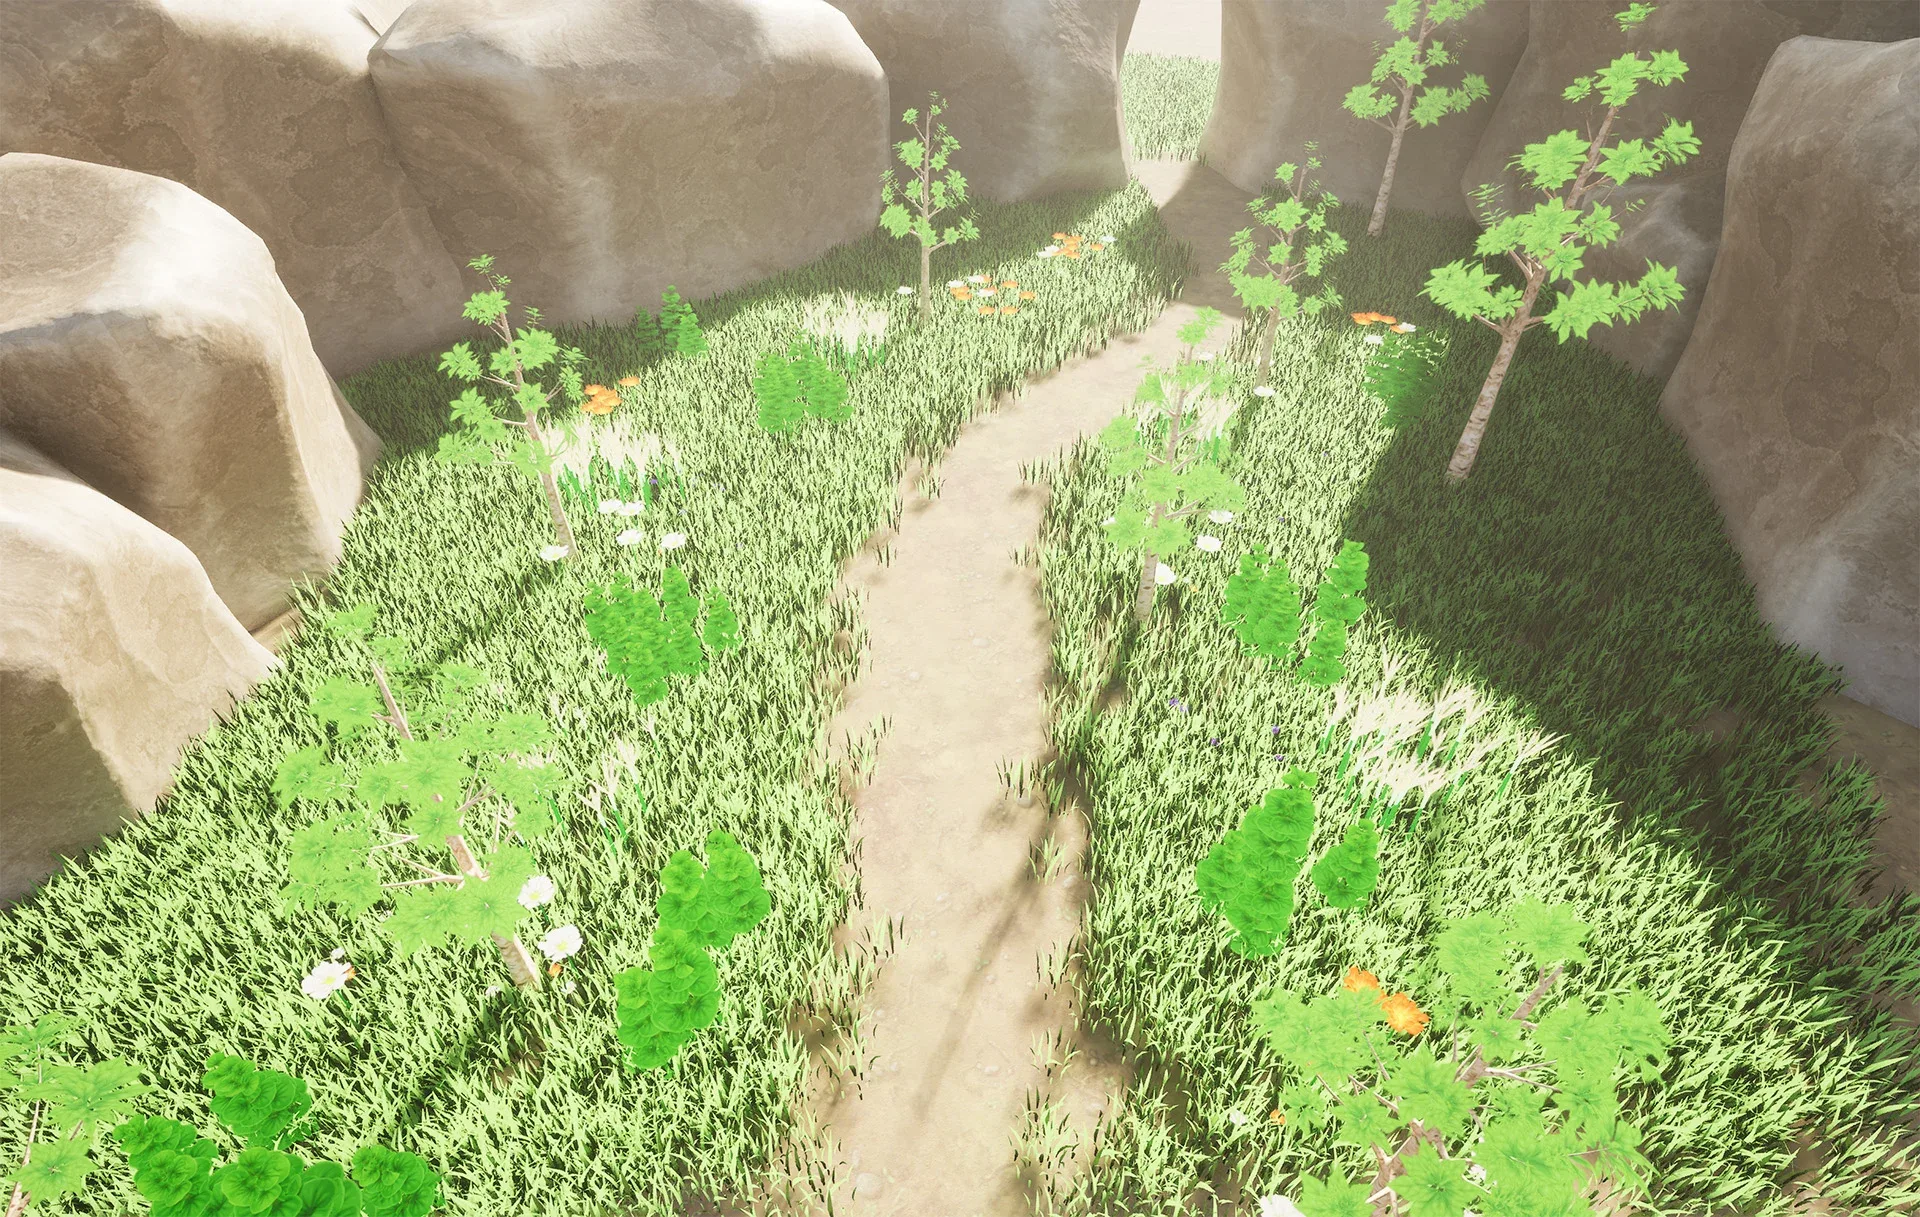 Cartoonish Game Foliage 3D Scene Pack